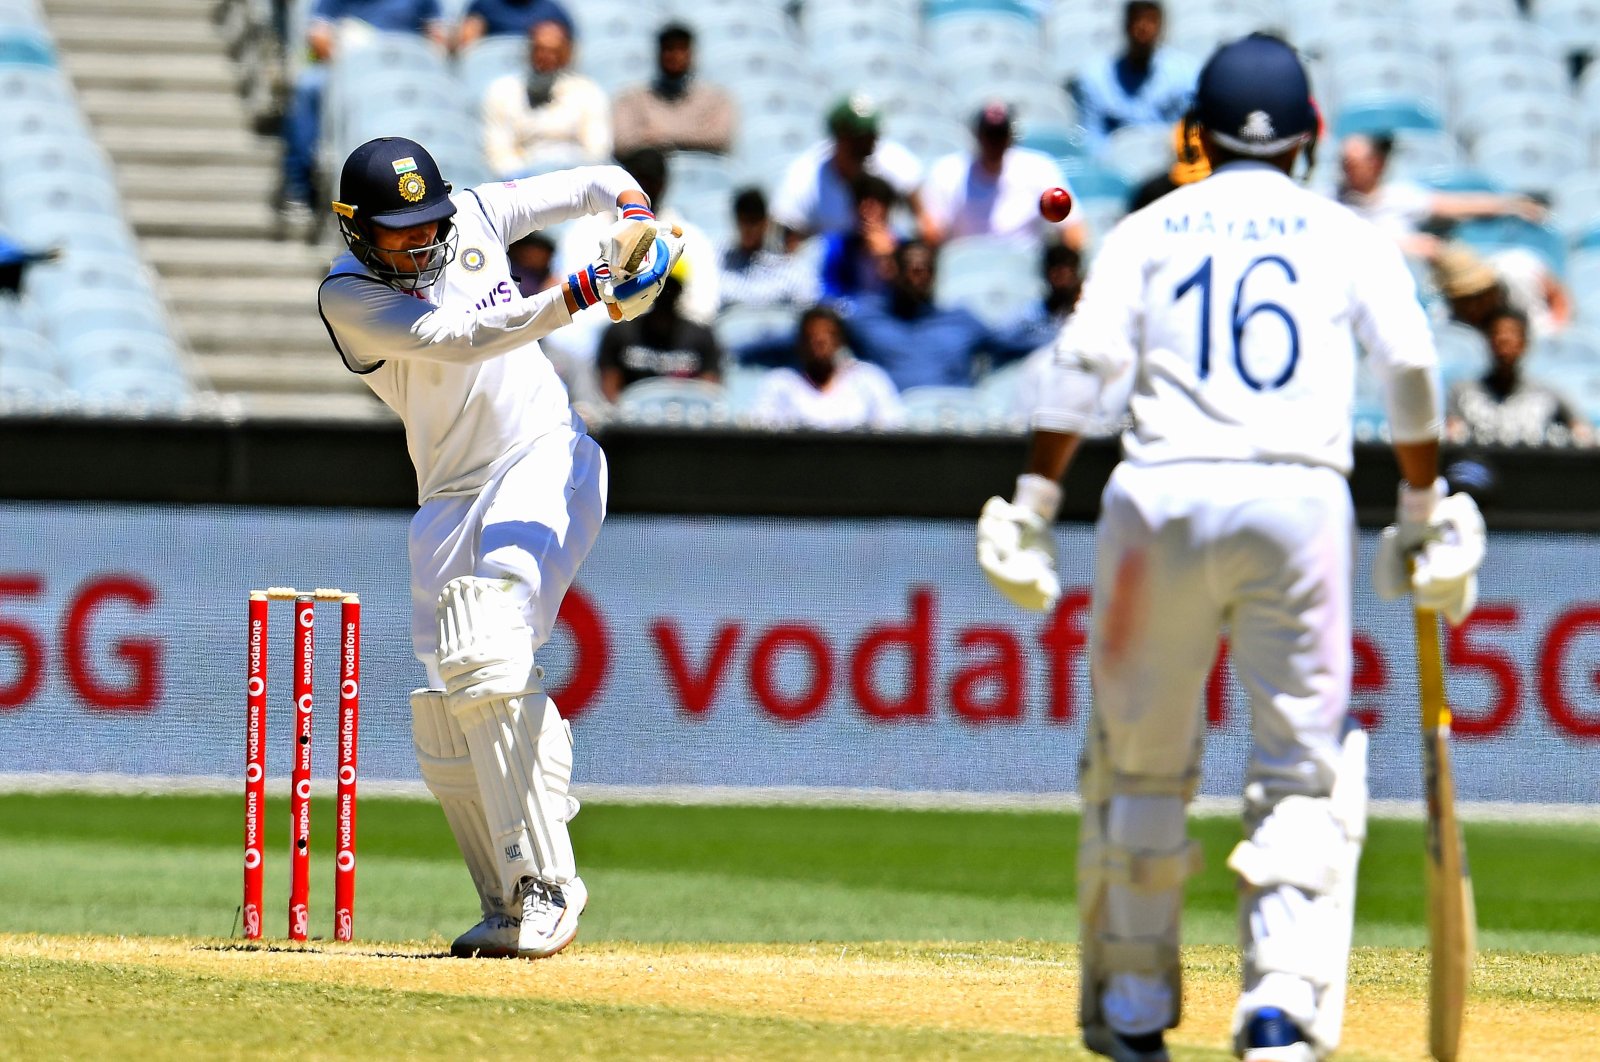 India's batsman Shubman Gill (L) plays a shot as teammate Mayank Agarwal looks on, in Melbourne, Australia, Dec. 29, 2020. (AFP PHOTO)